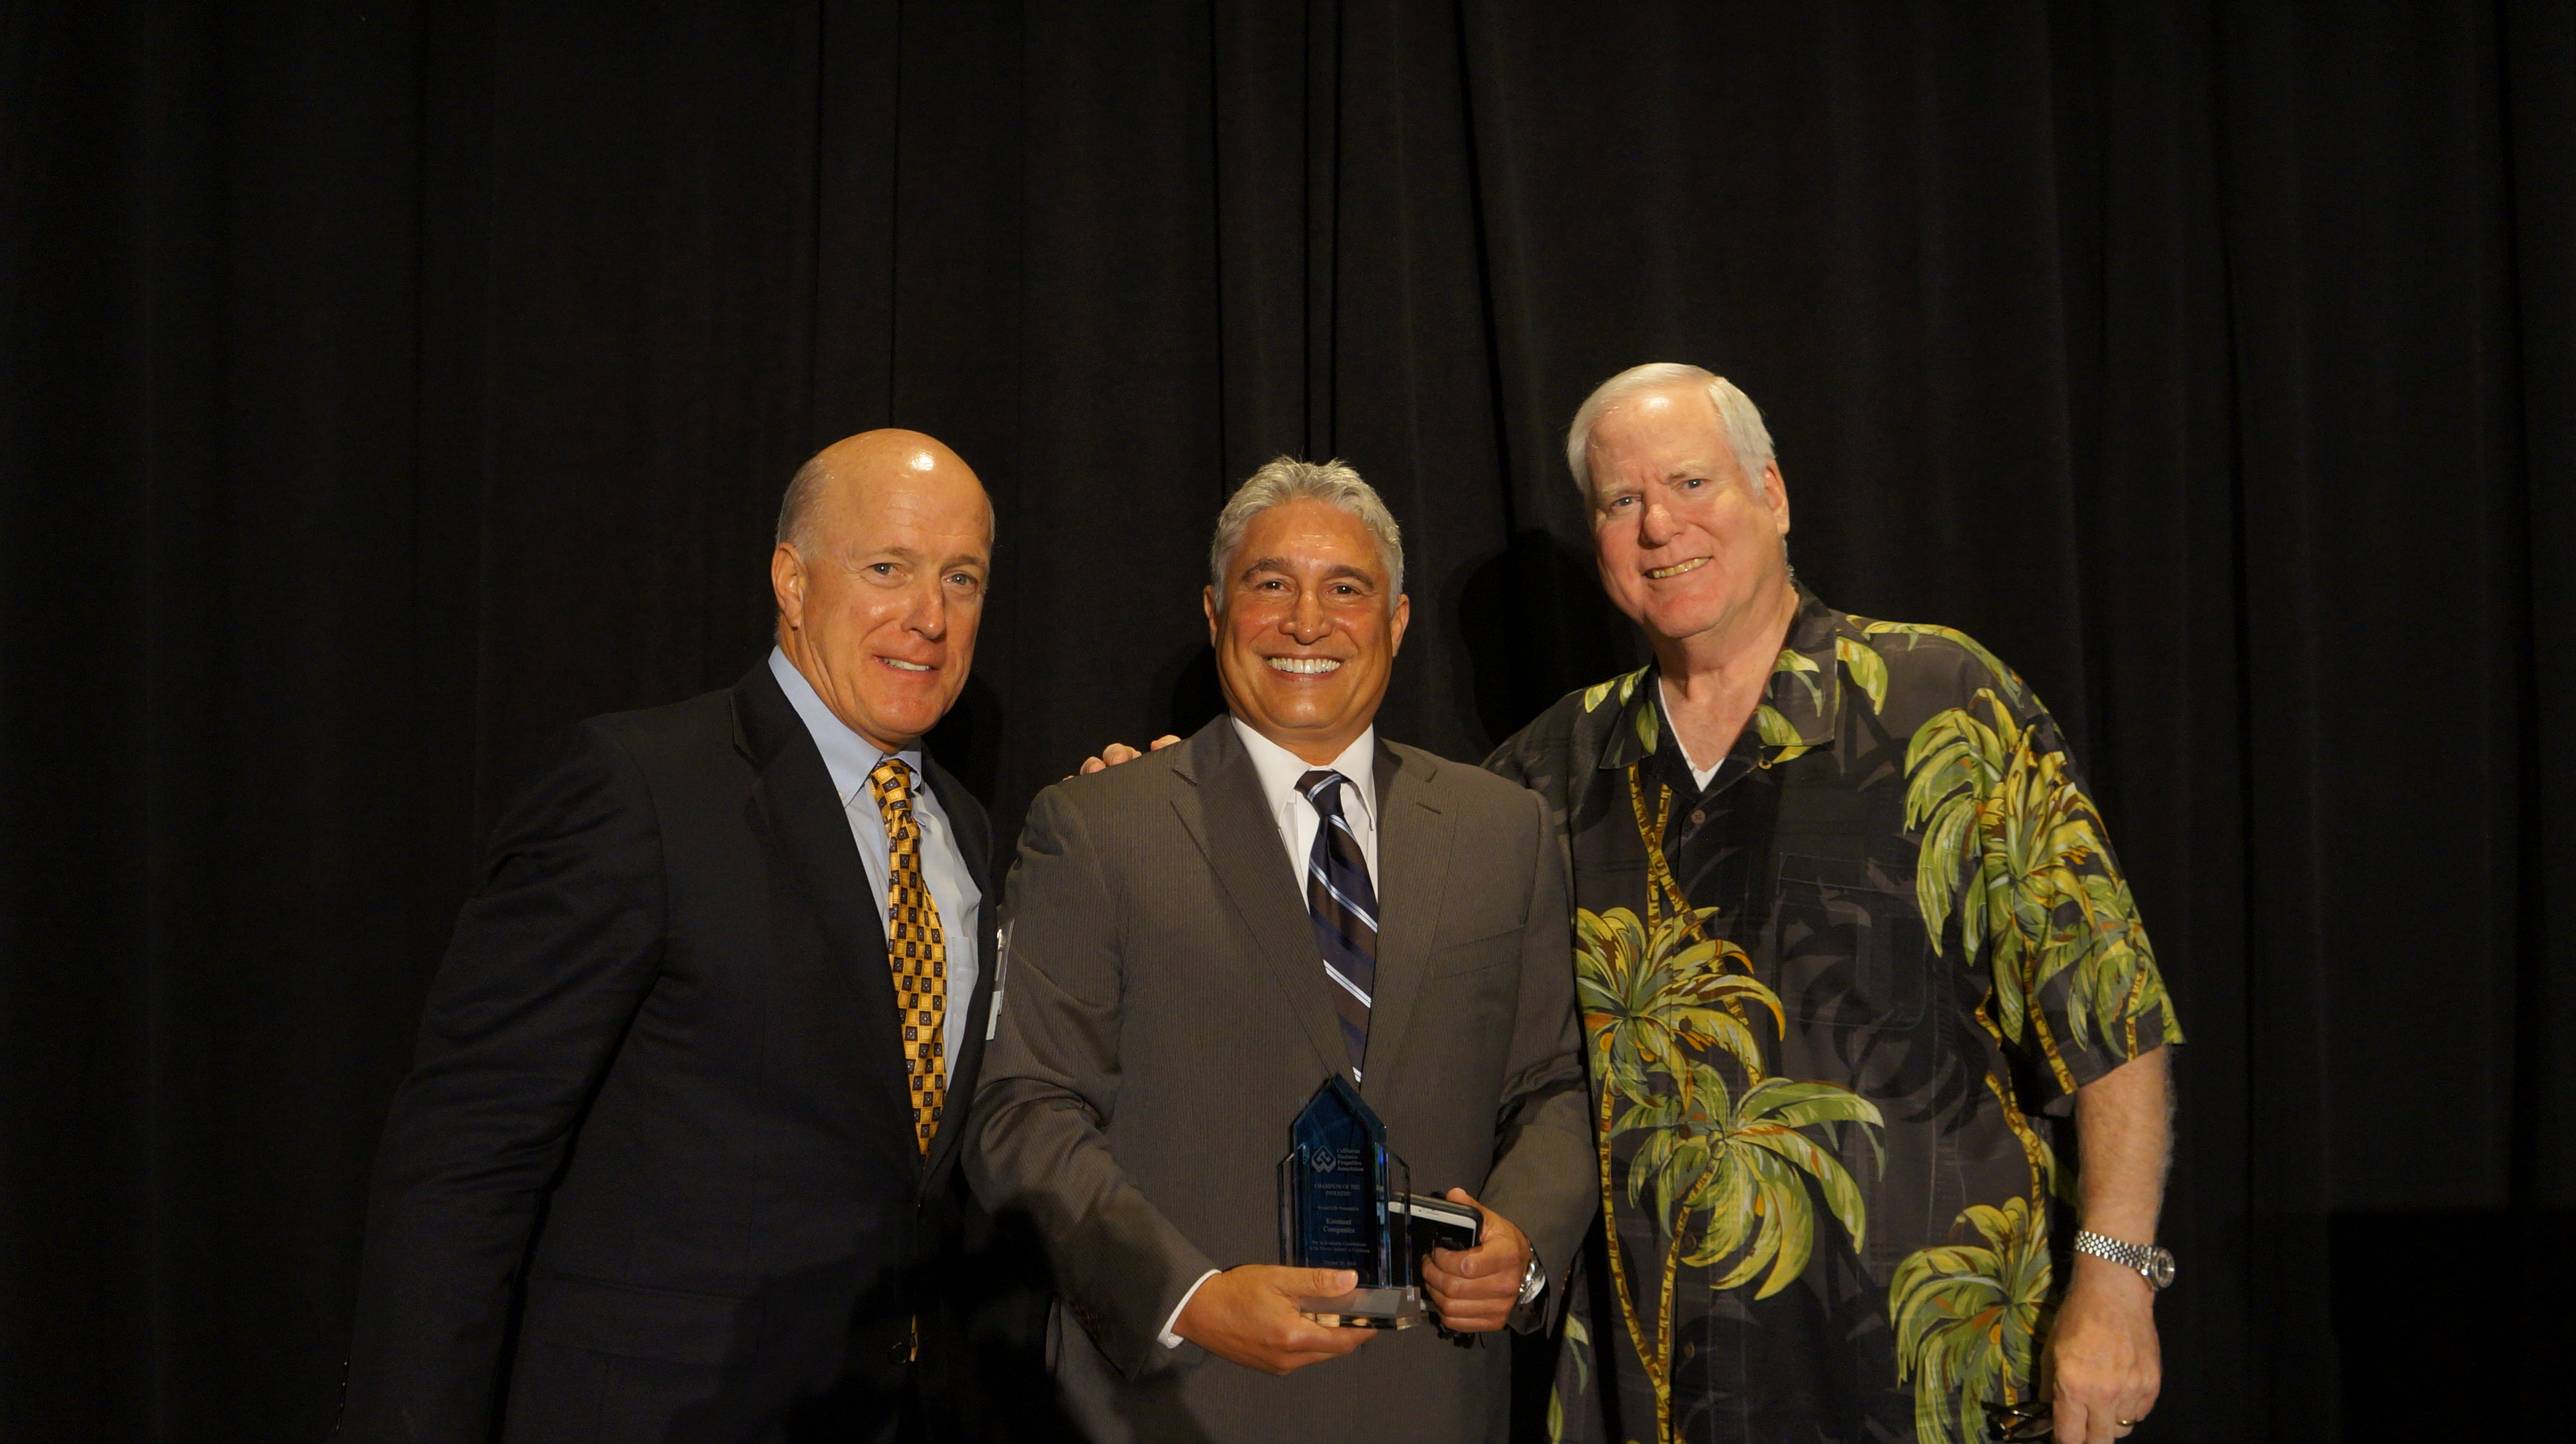 2016 CBPA Industry Awards Dinner - Larry J. Kosmont Receiving his Award